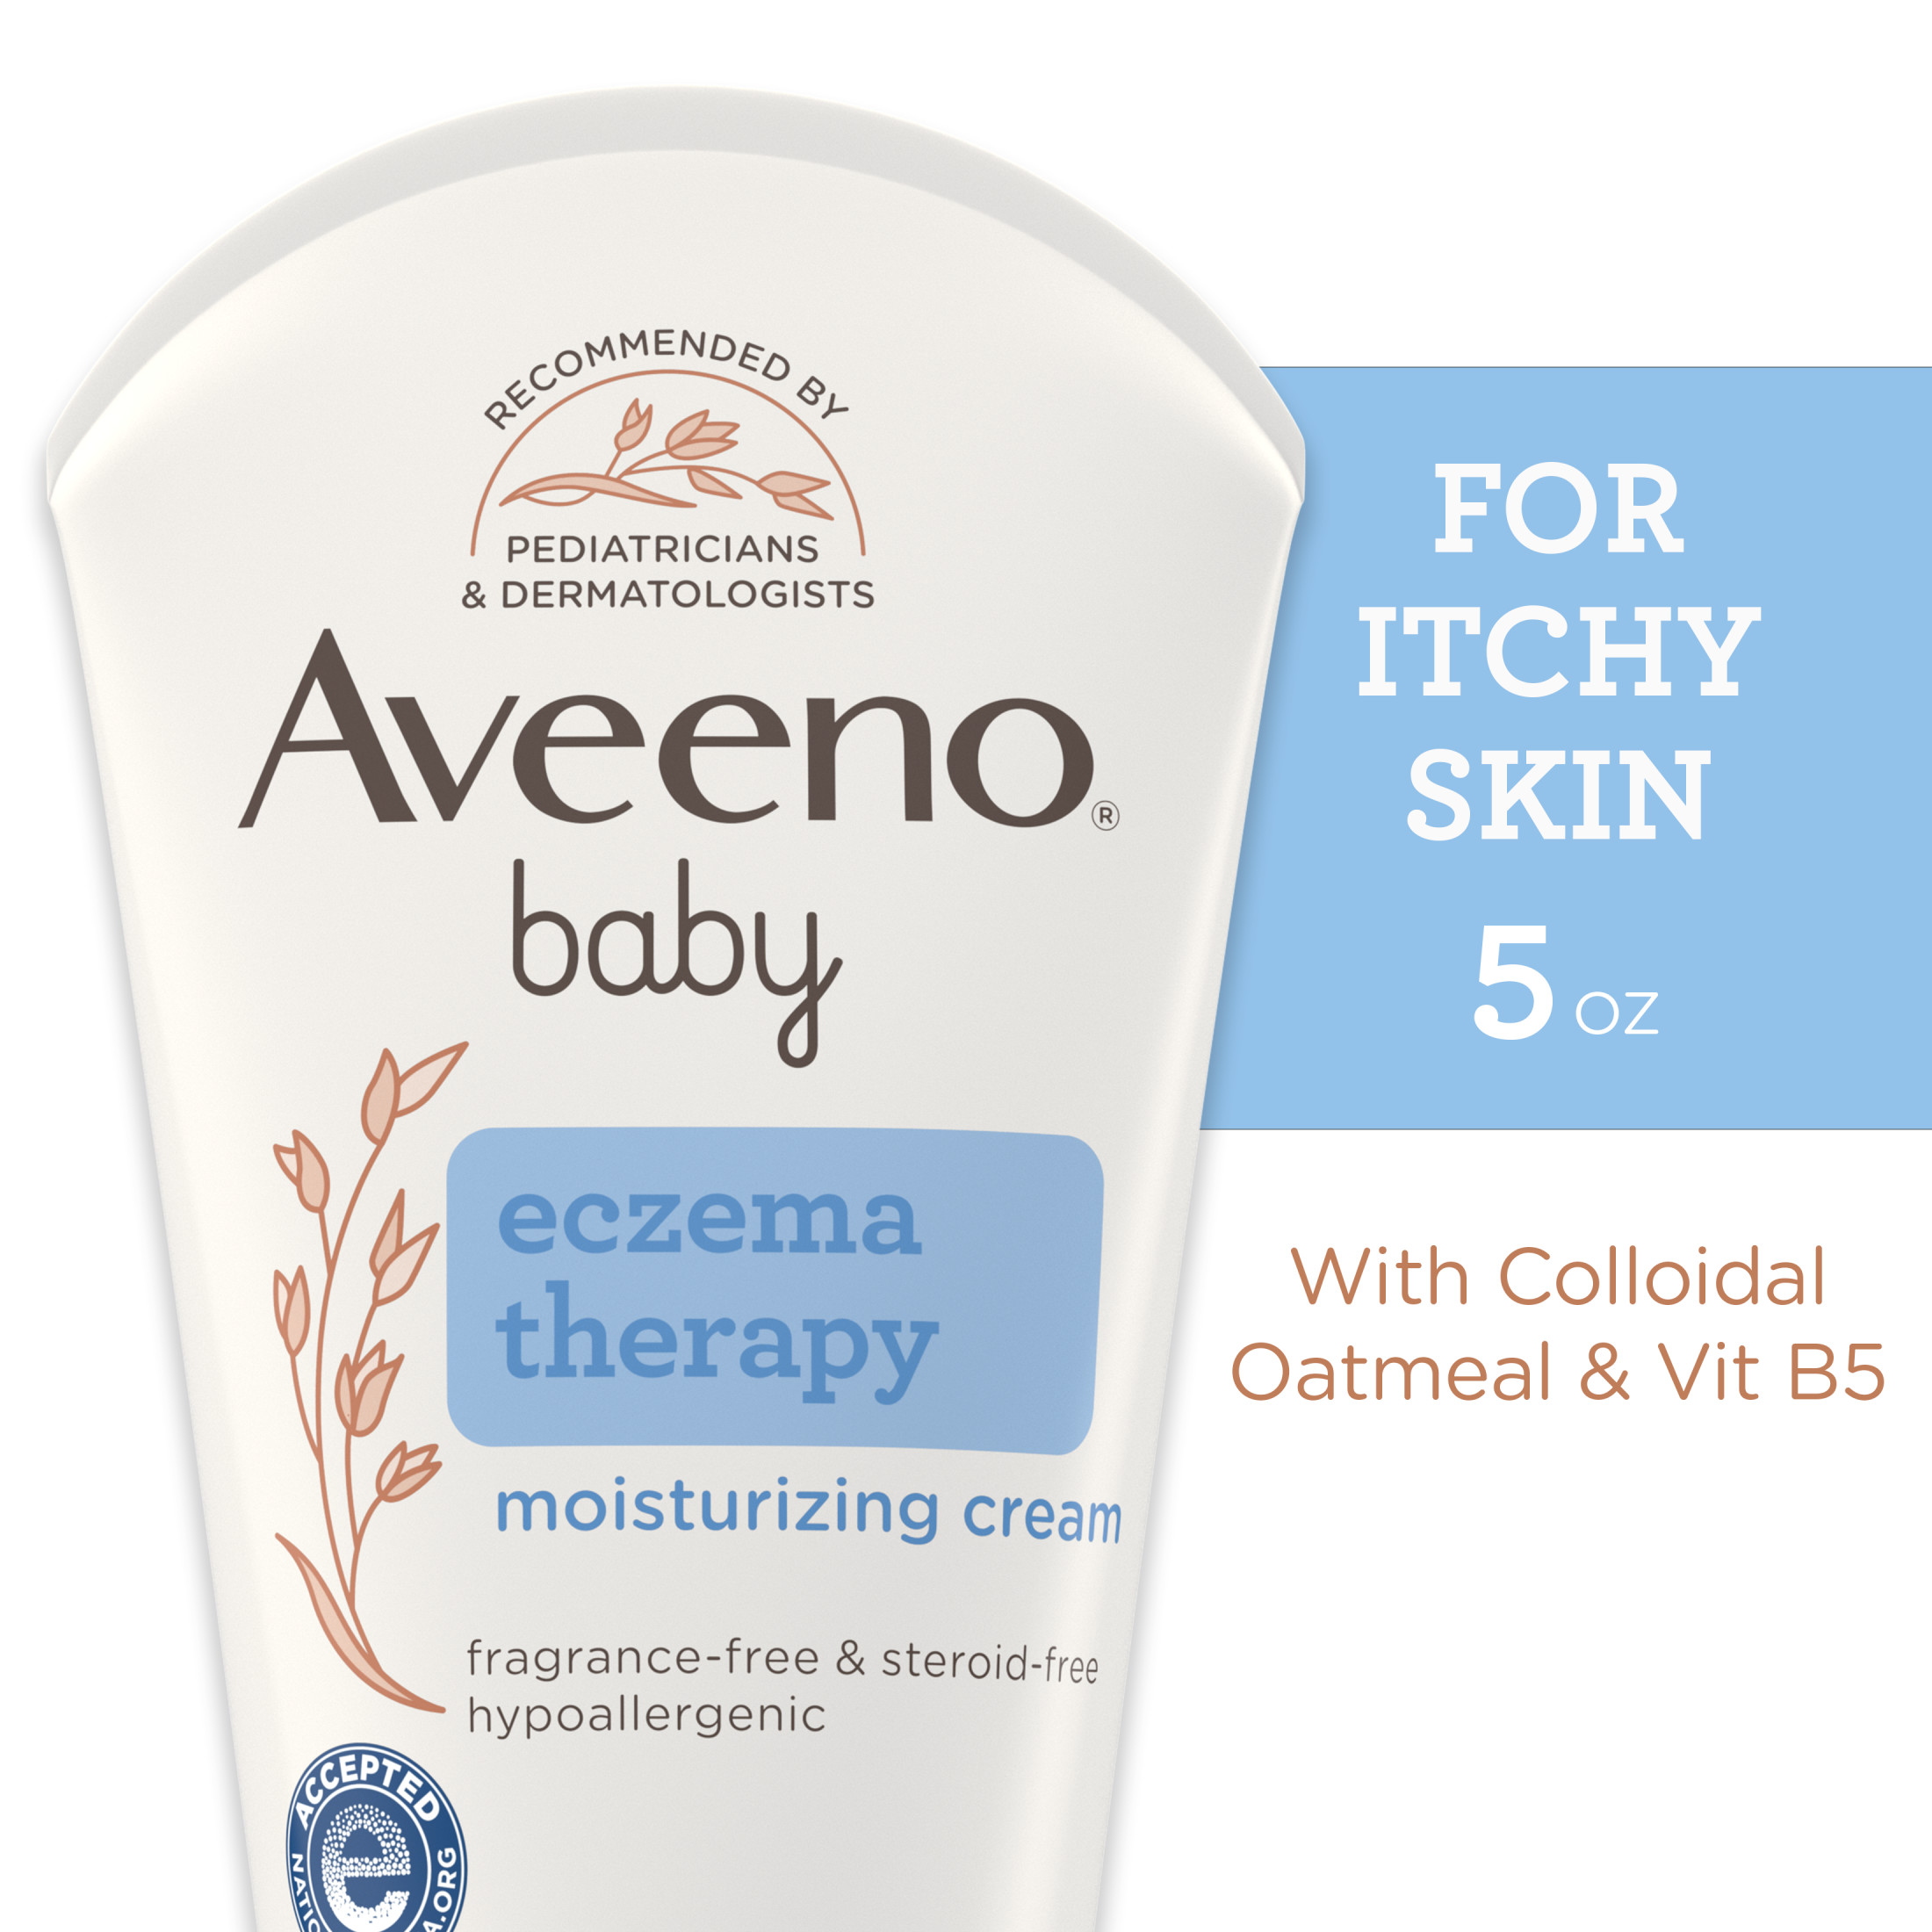 Aveeno Baby Eczema Therapy Moisturizing Cream Body Lotion with Oatmeal, 5 oz - image 1 of 9